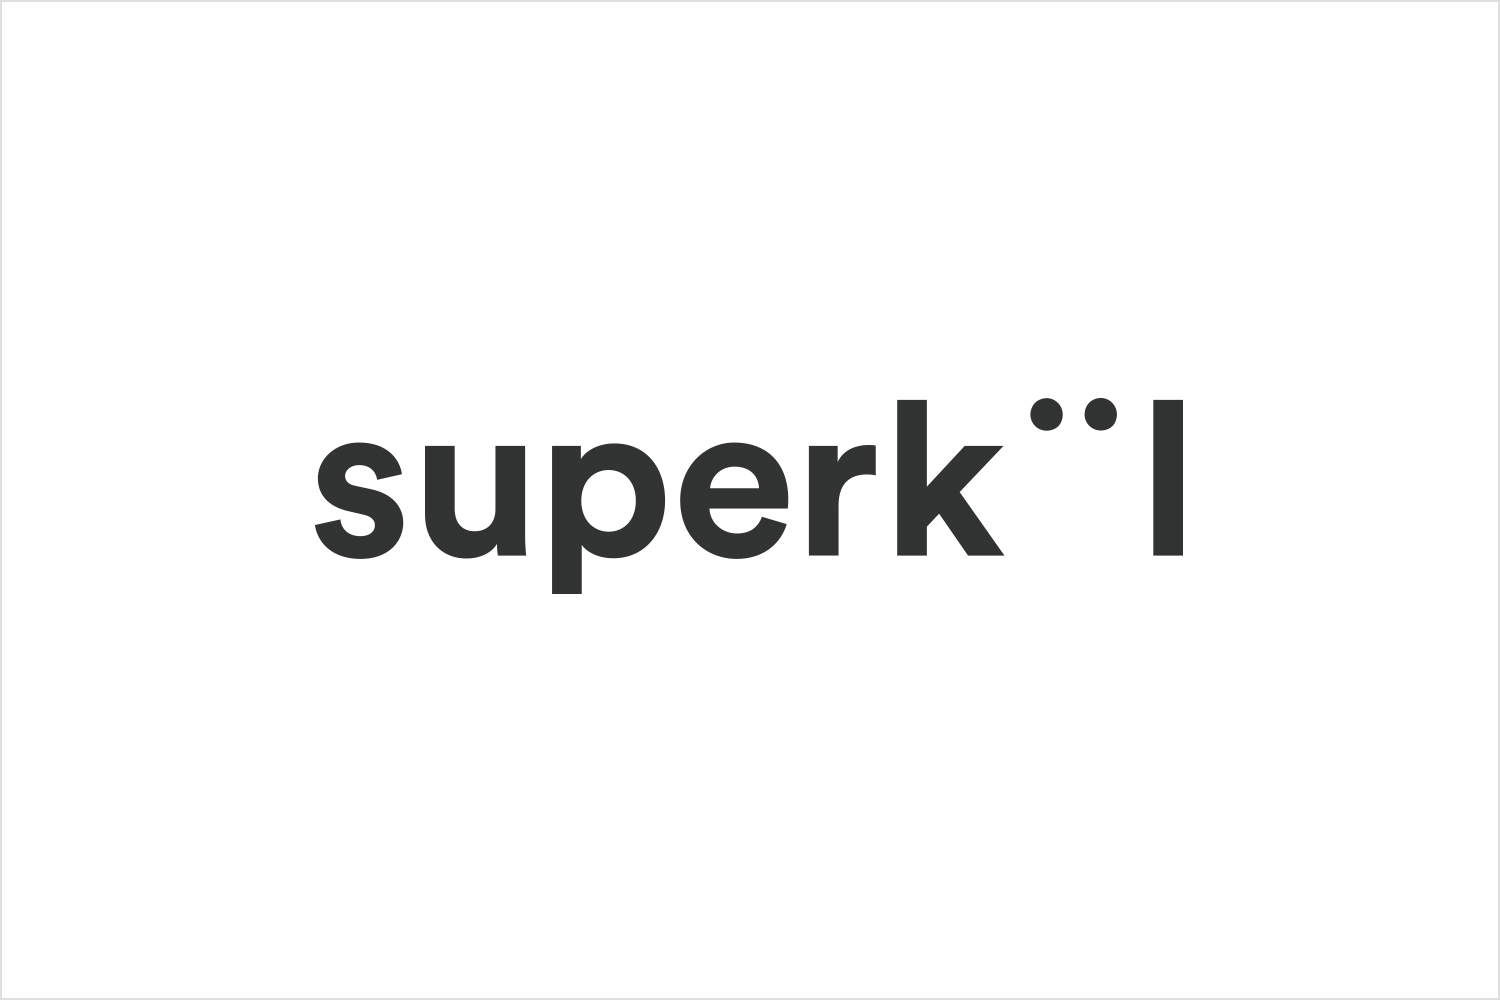 Creative Logotype Gallery & Inspiration: Superkül by Blok, Canada